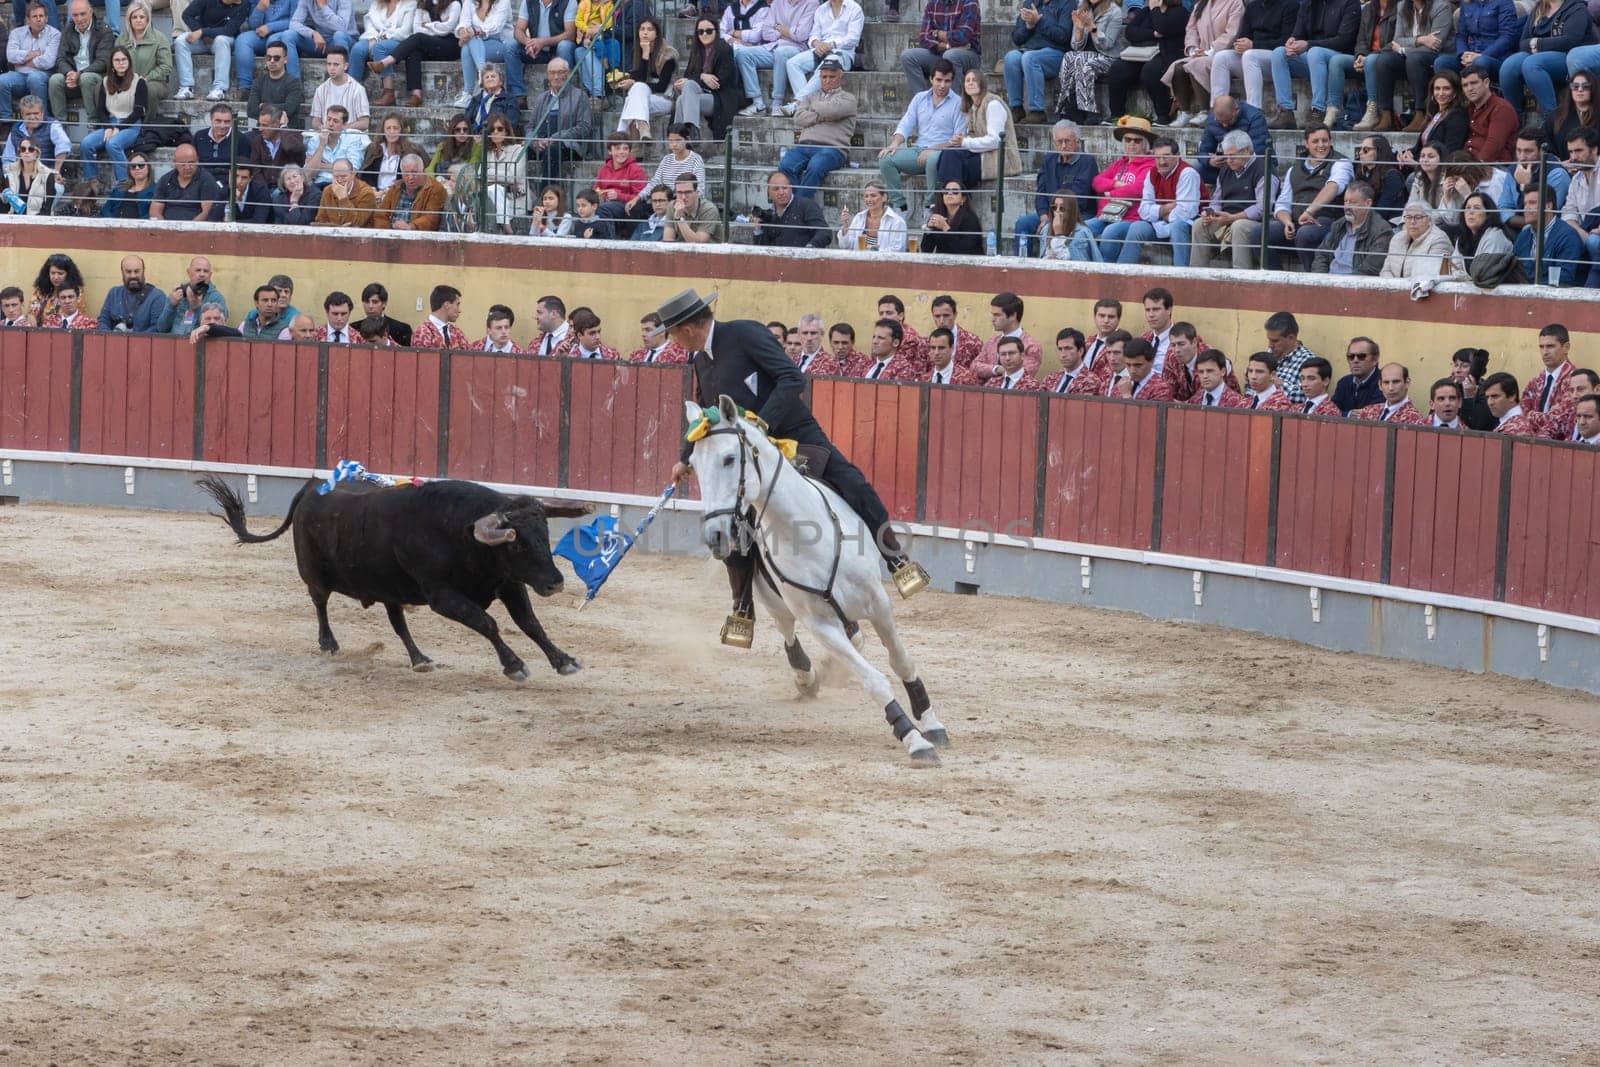 March 26, 2023 Lisbon, Portugal: Tourada - cavaleiro on horseback provokes the bull on arena by Studia72